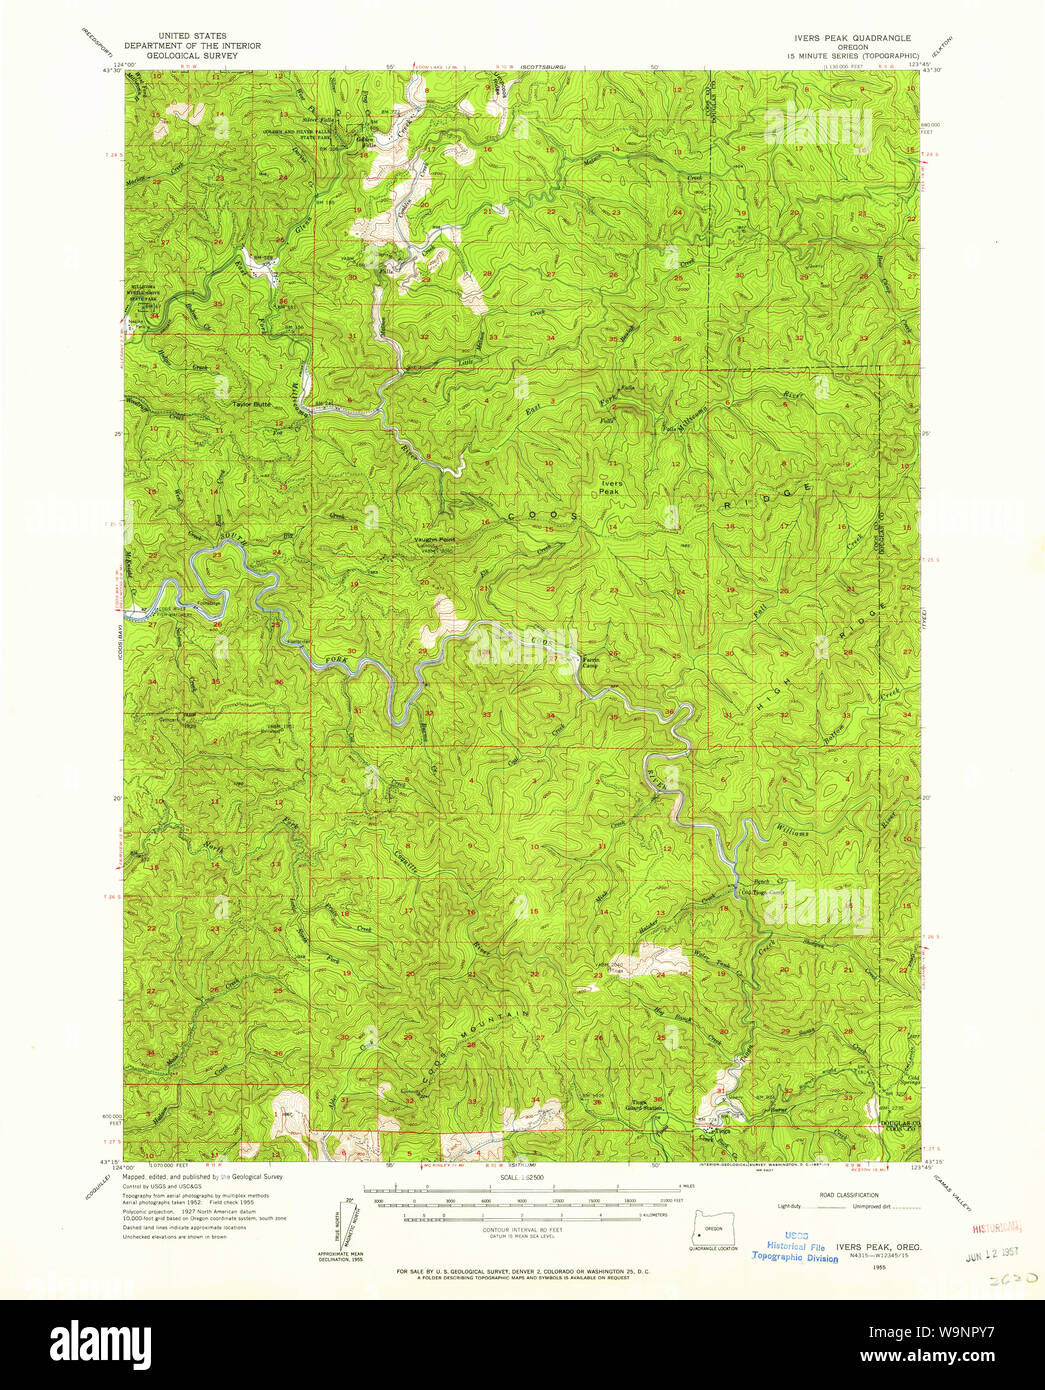 USGS Topo Karte Oregon Ivers Peak 282608 1955 62.500 Wiederherstellung Stockfoto